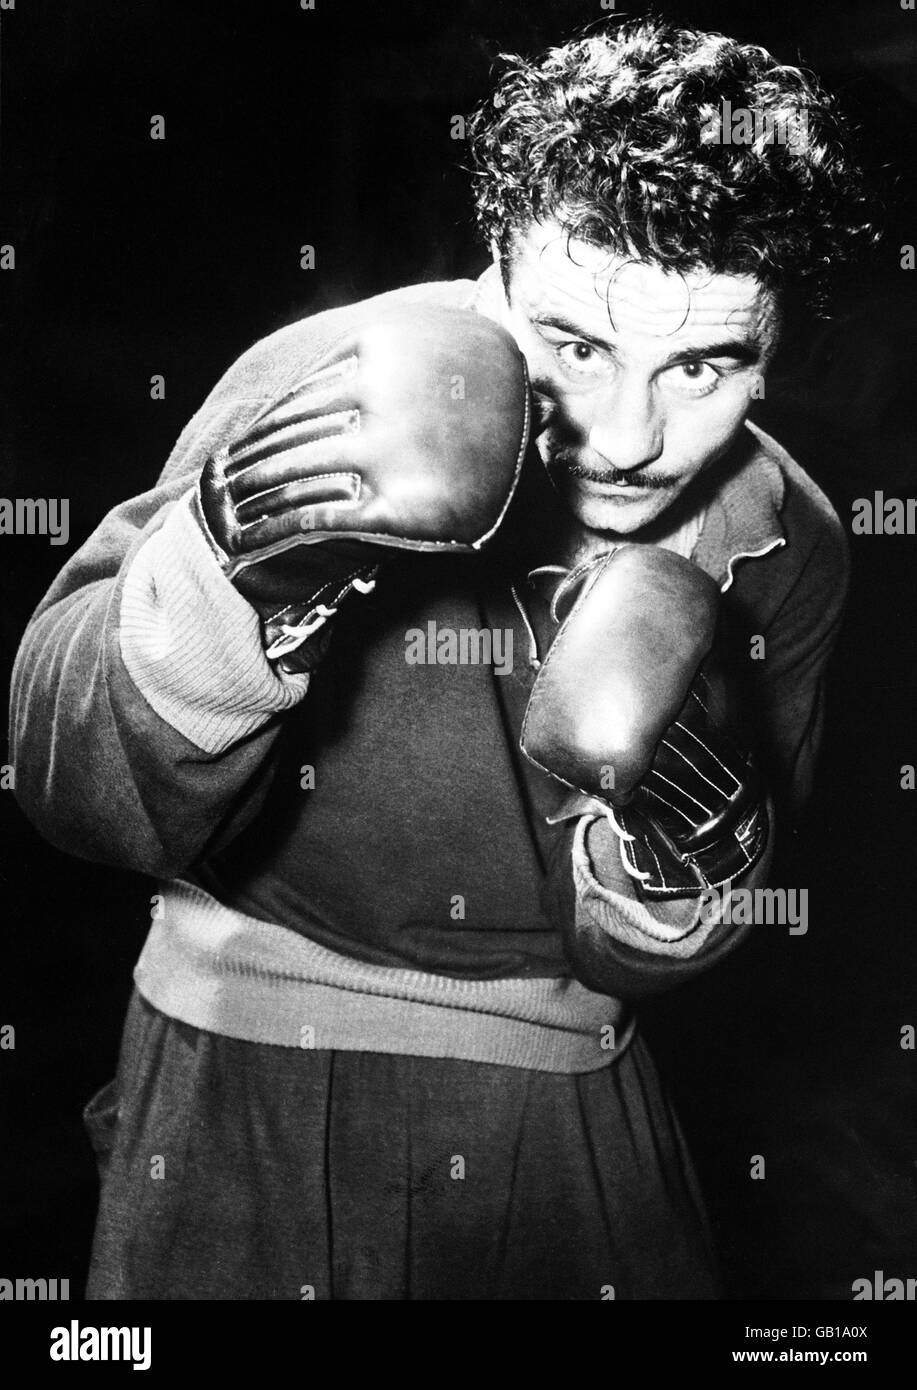 Boxing Stock Photo